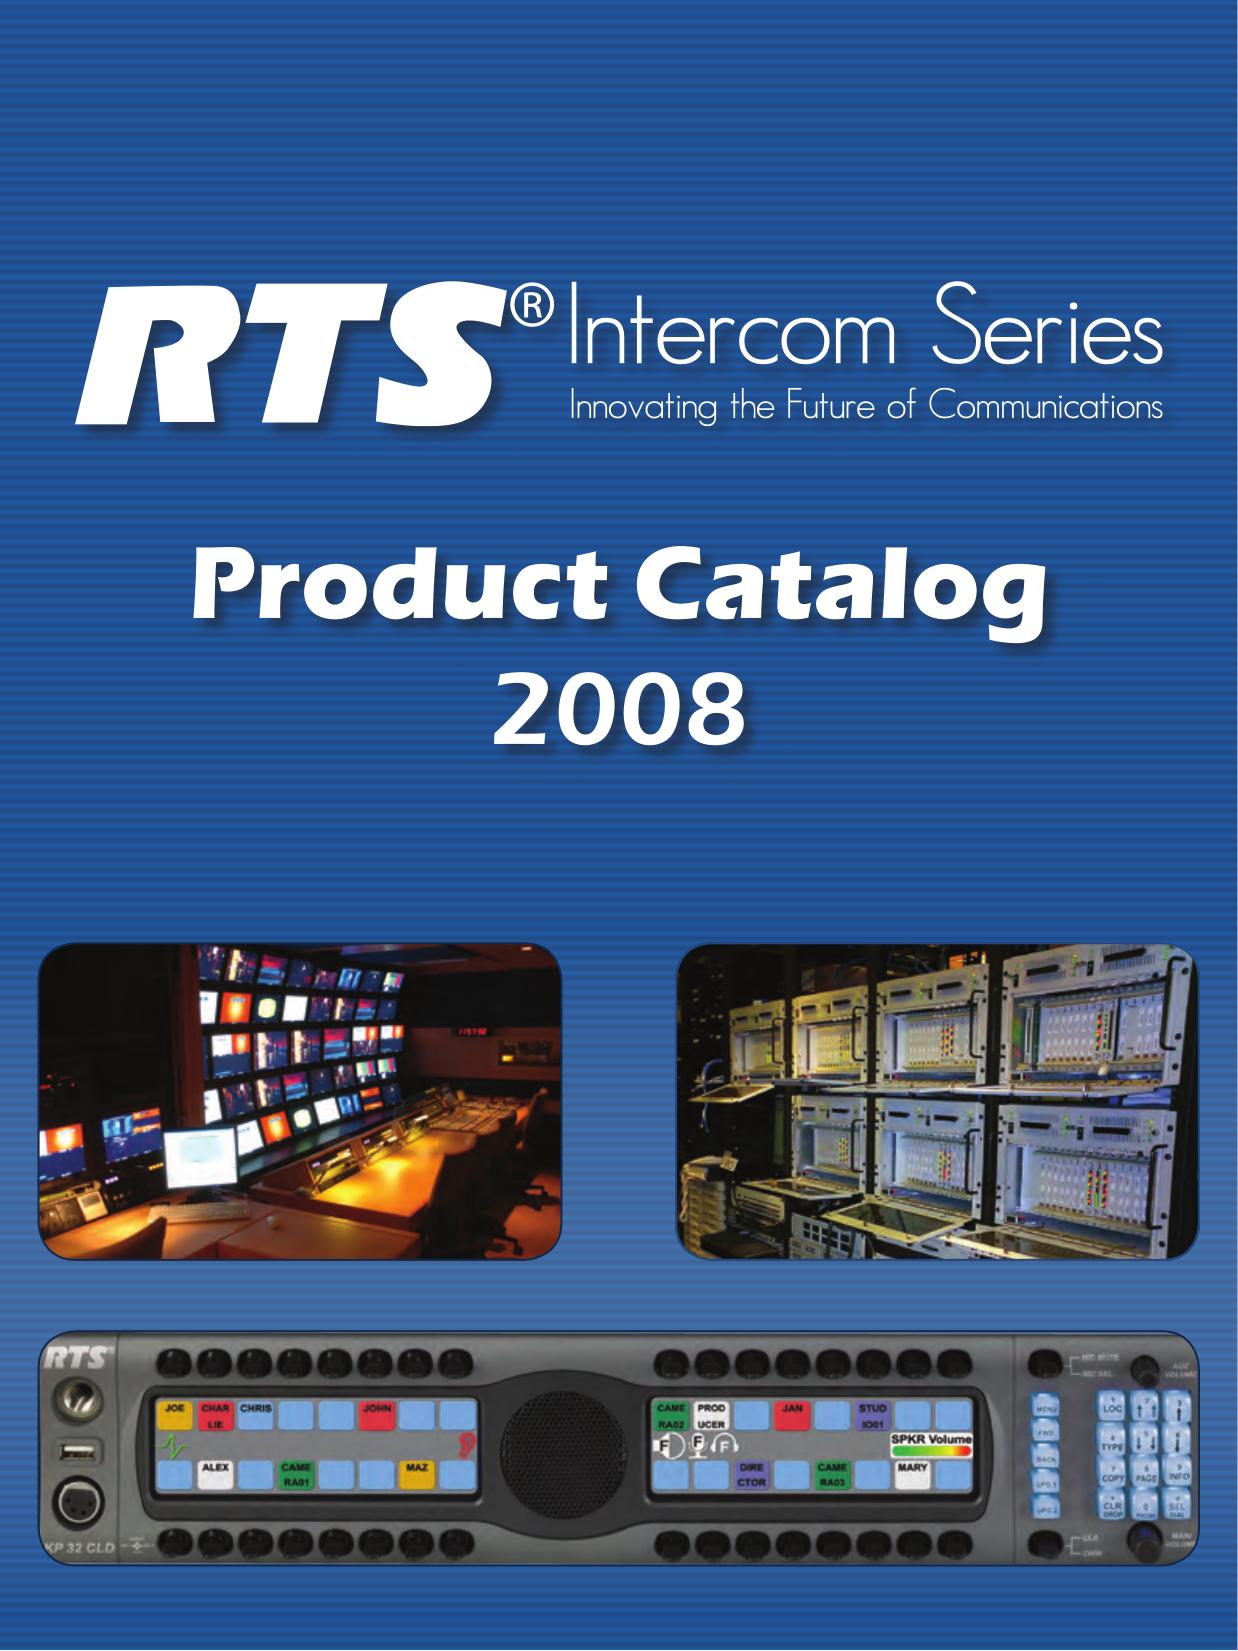 pdf for Telex Other CSI-200 IntercomSystem manual